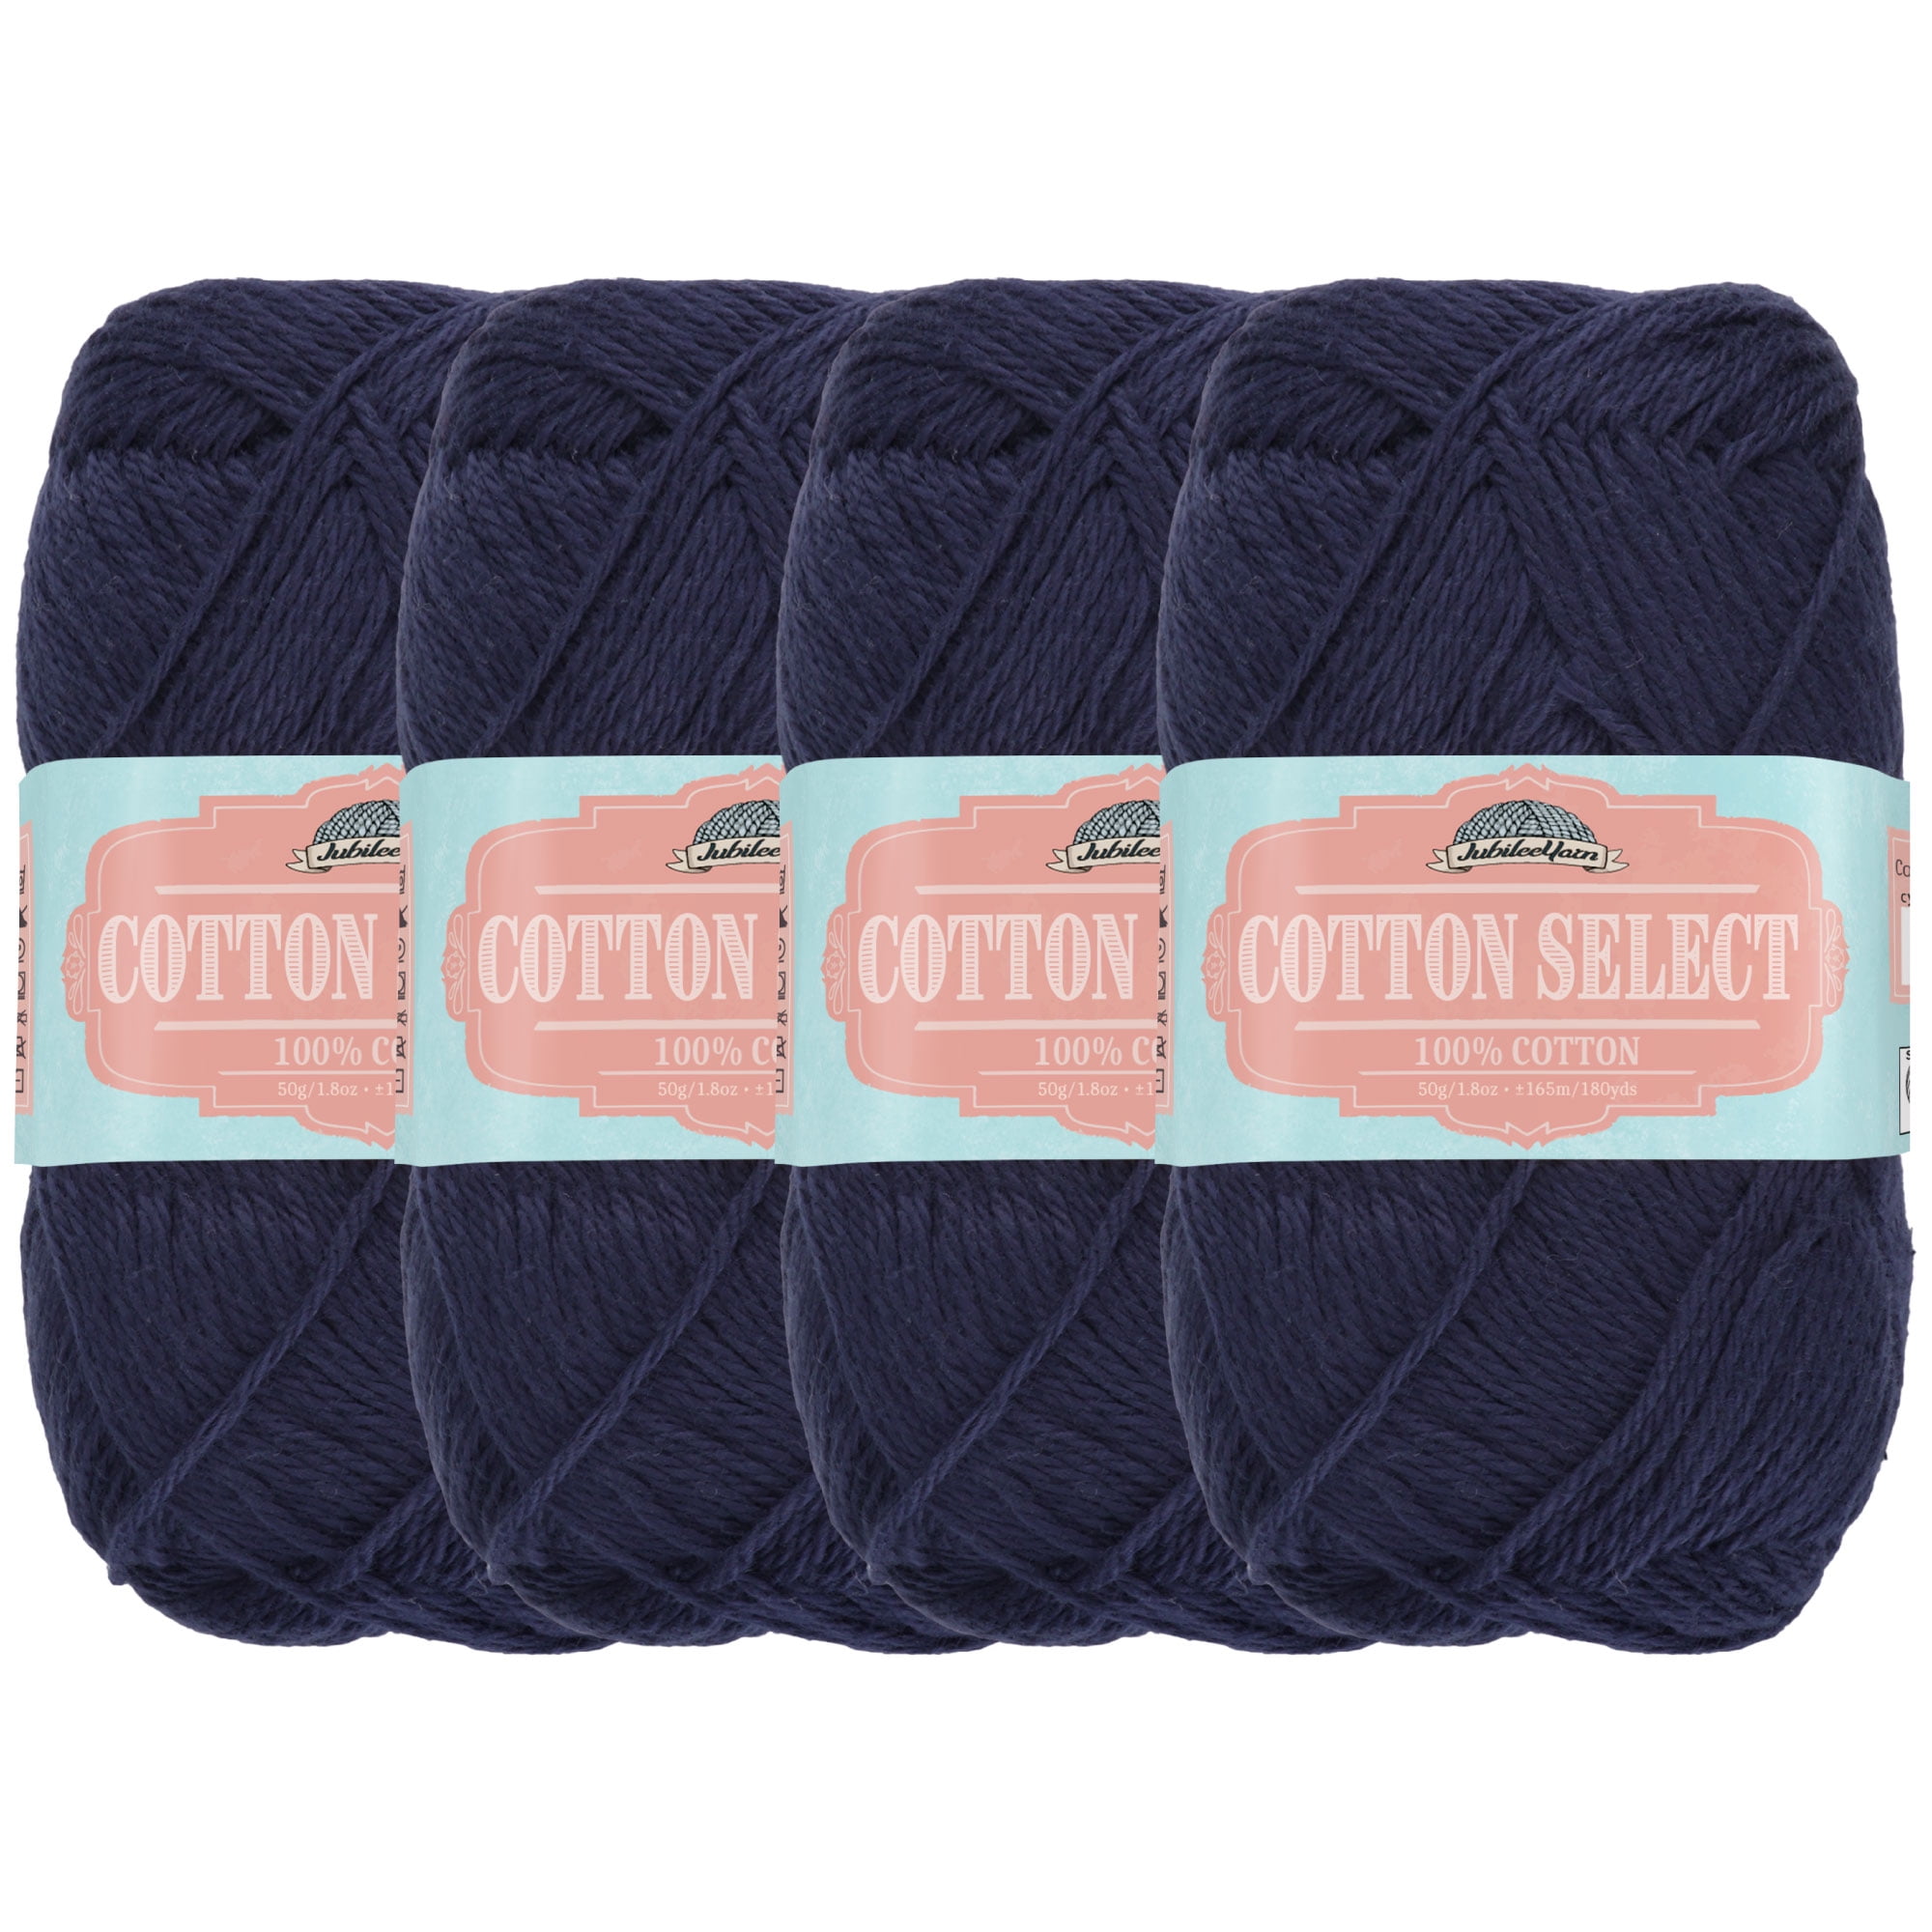 JubileeYarn Cotton Select Yarn - Sport Weight - 50g/Skein - Burnt Orange -  4 Skeins